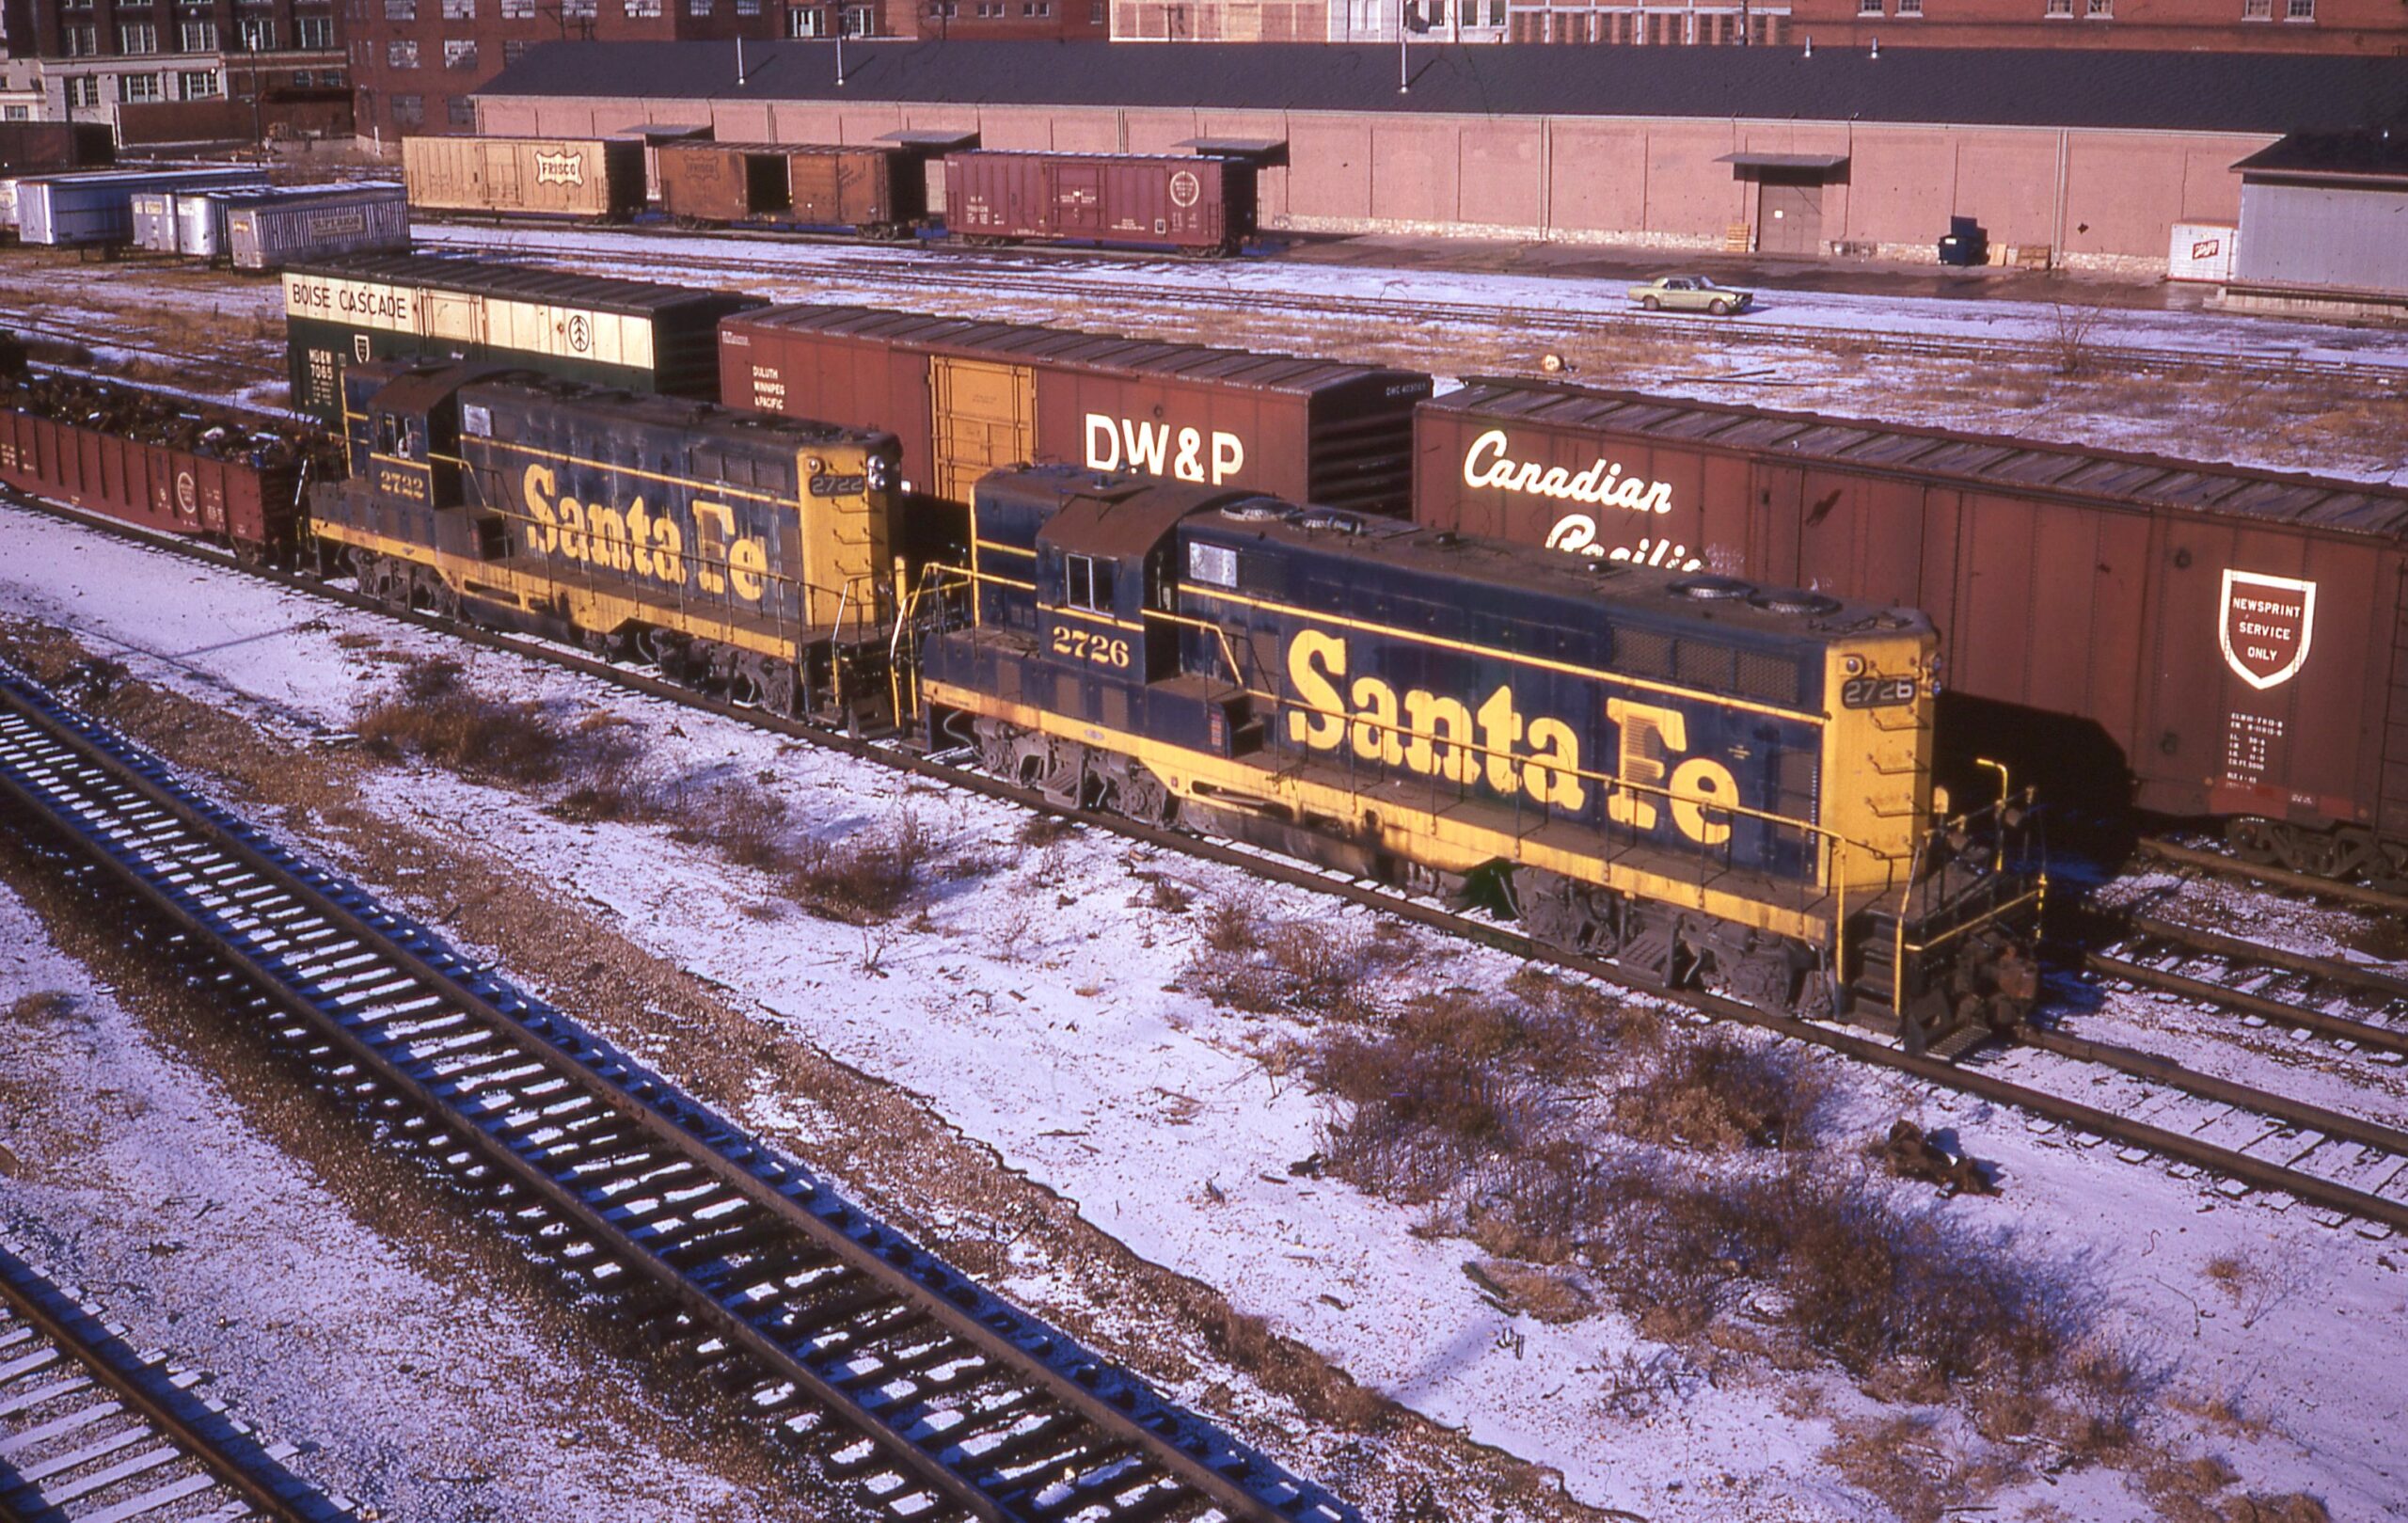 NRHS | ATSF | Kansas City, MO | GP7 2726 2722 | eb transfer freight 115-2 | Dec 24, 1973 | Richard Prince